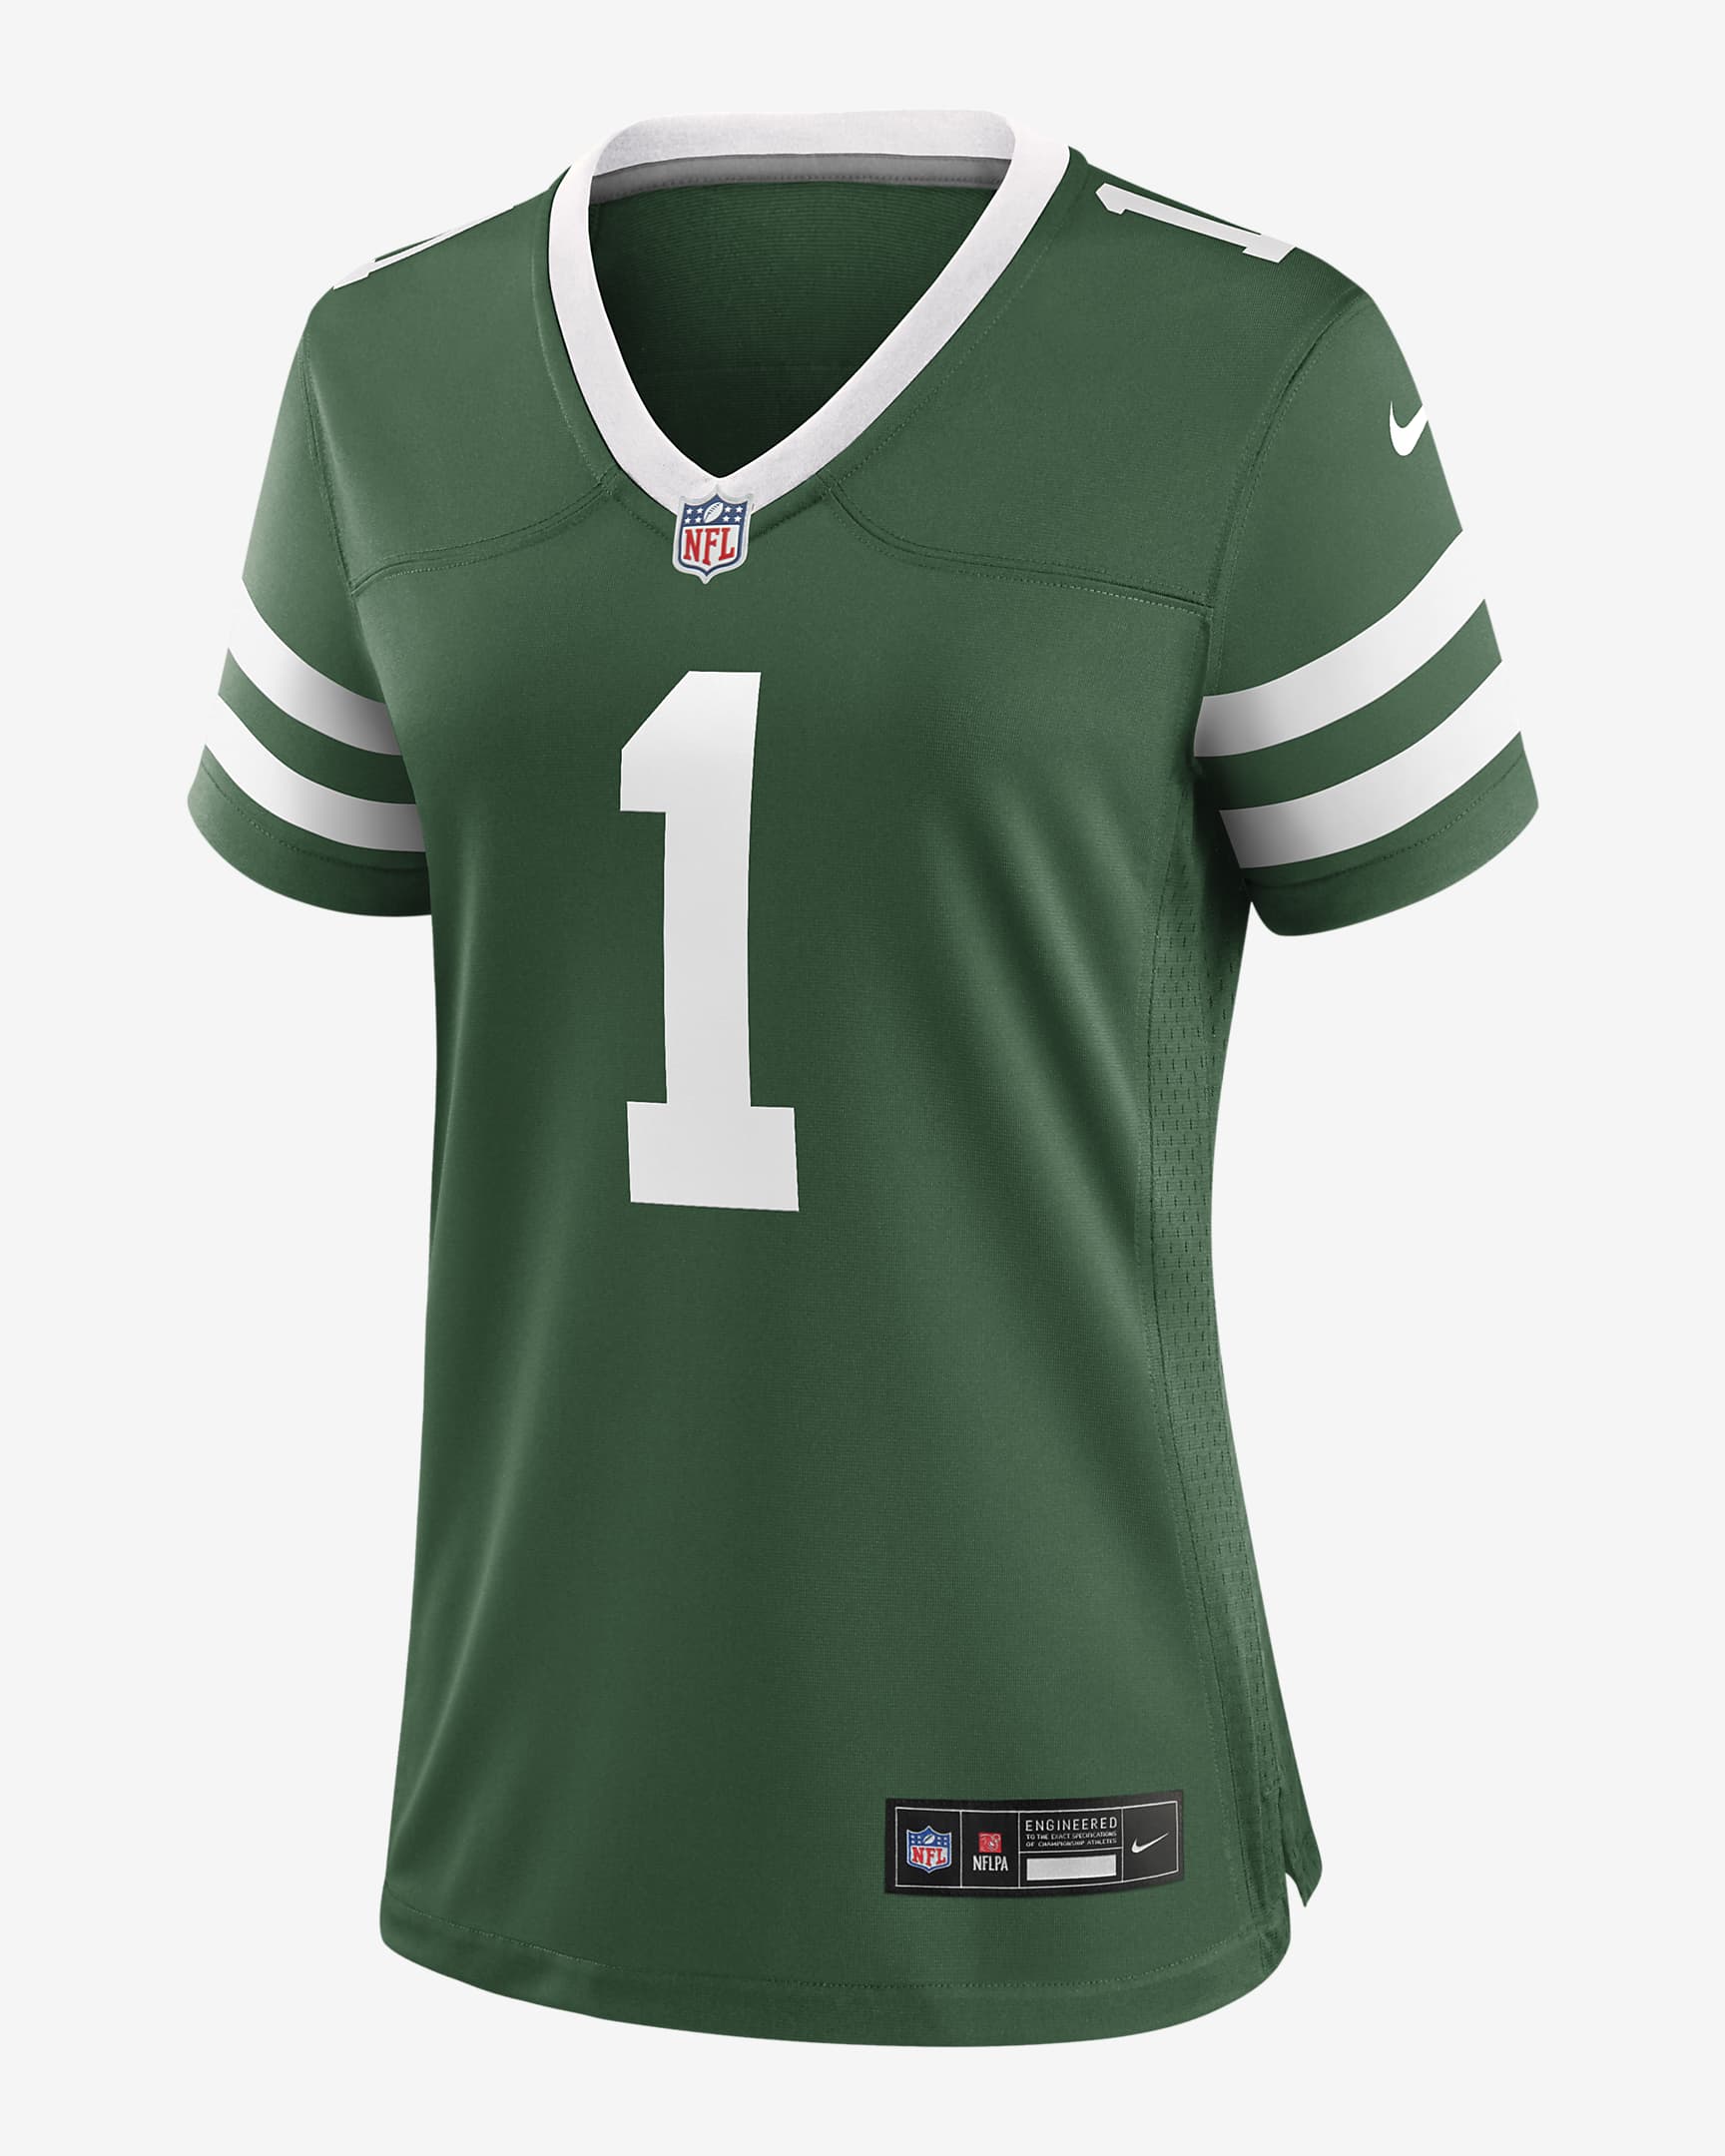 Sauce Gardner New York Jets Women's Nike NFL Game Football Jersey. Nike.com